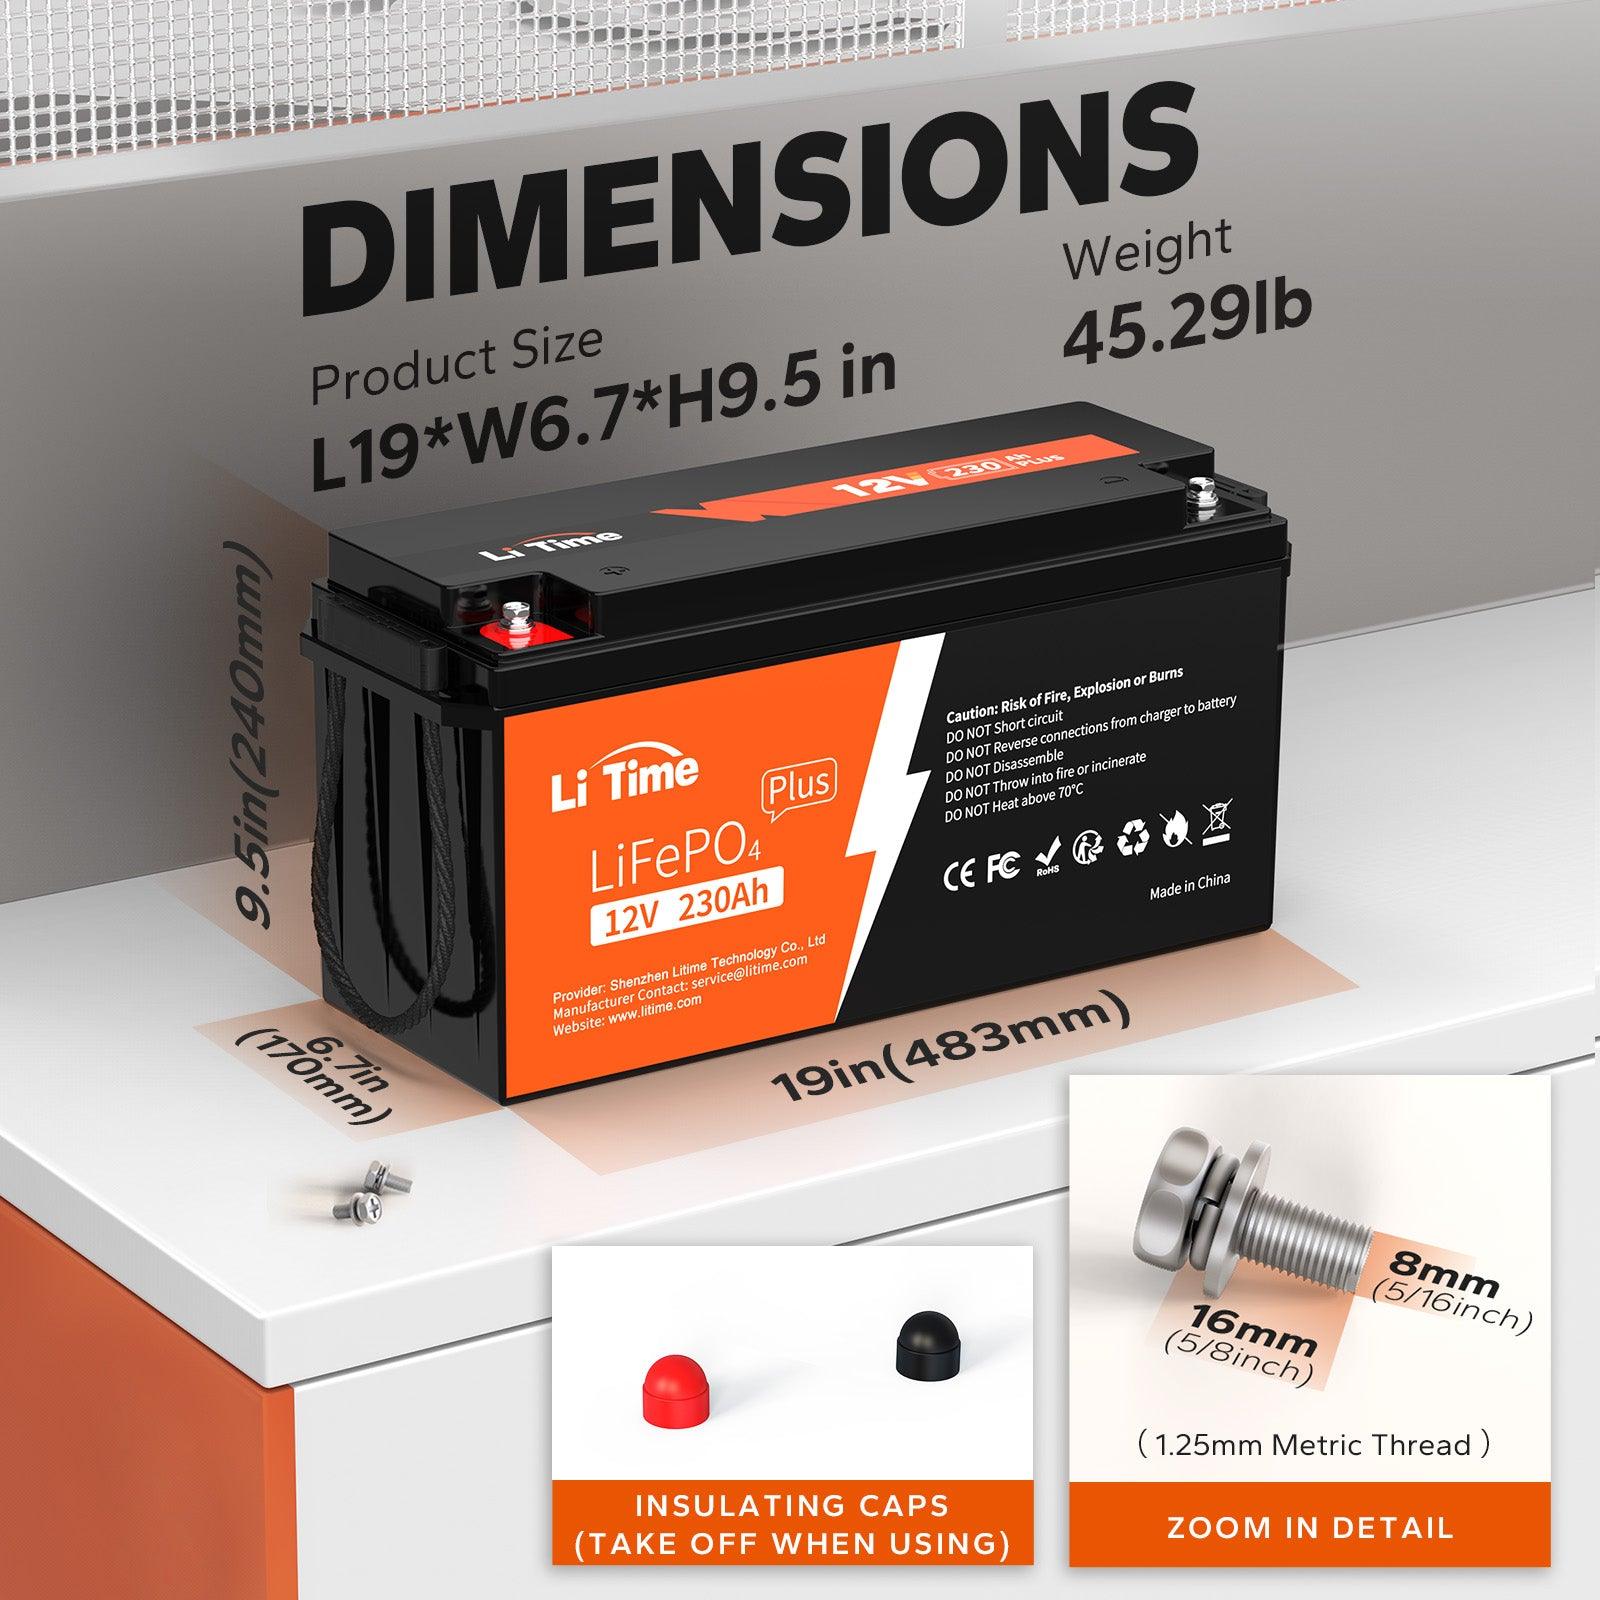 litime12v 230ah plus low temp protection lithium battery size